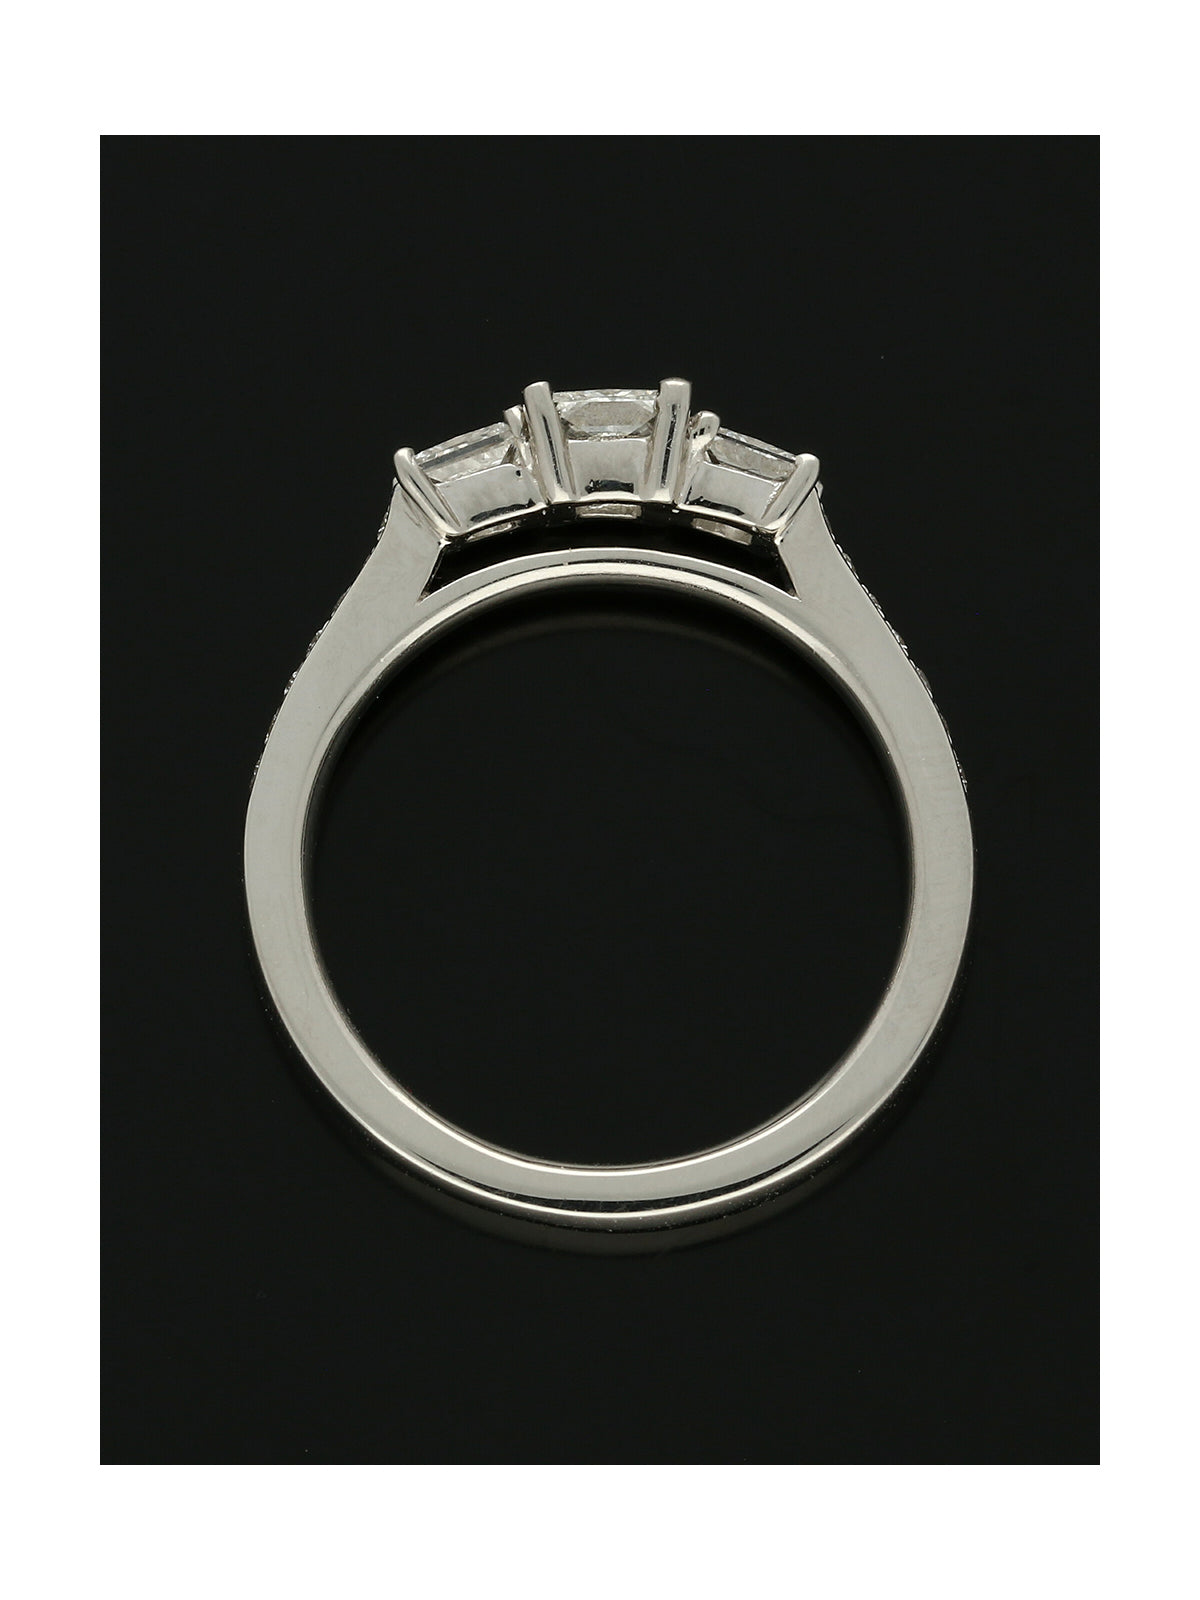 Diamond Three Stone Ring 0.89ct Princess Cut in Platinum with Diamond Shoulders